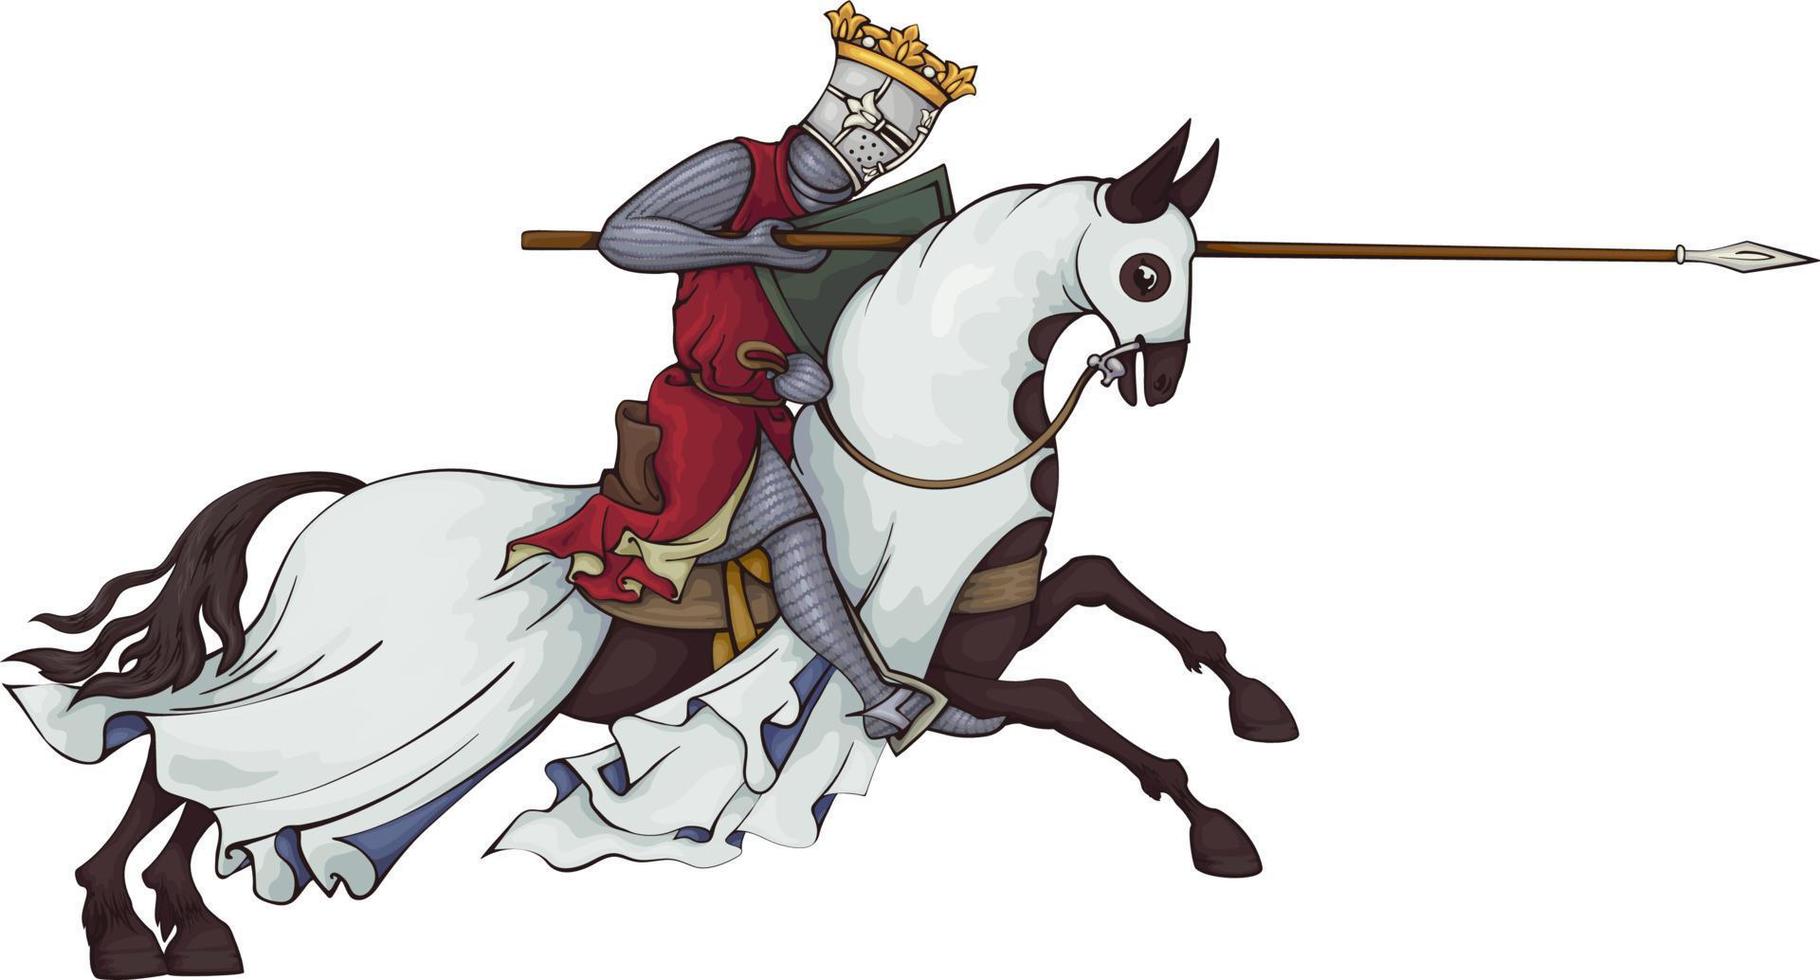 cavaleiro medieval em horse.king.rider em armadura de malha em horseback.old style.illustration. vetor